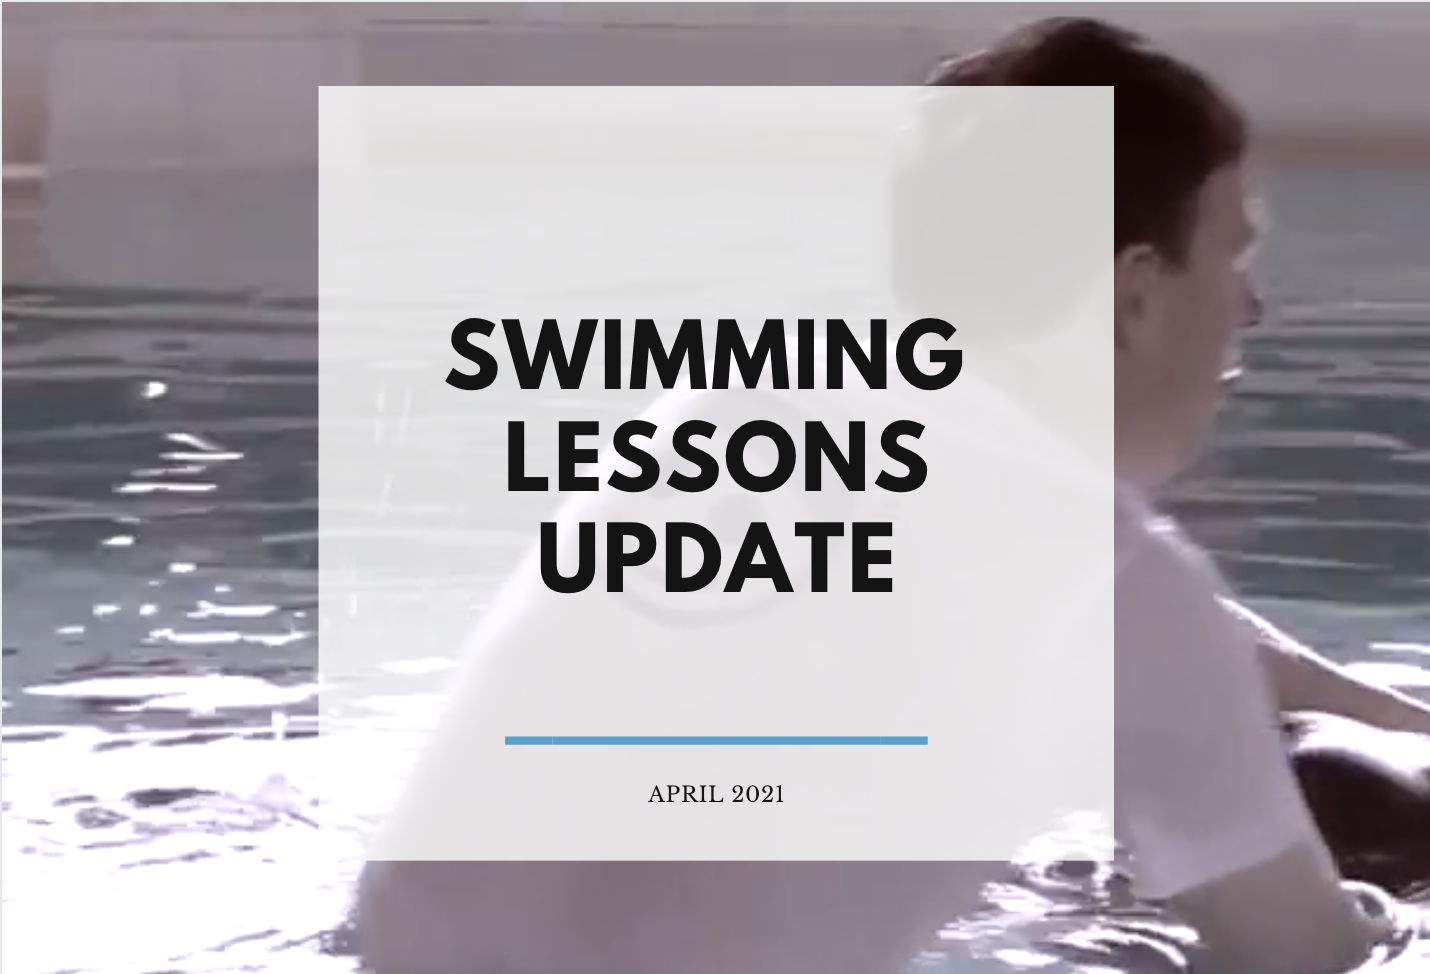 SwimEasy lessons update